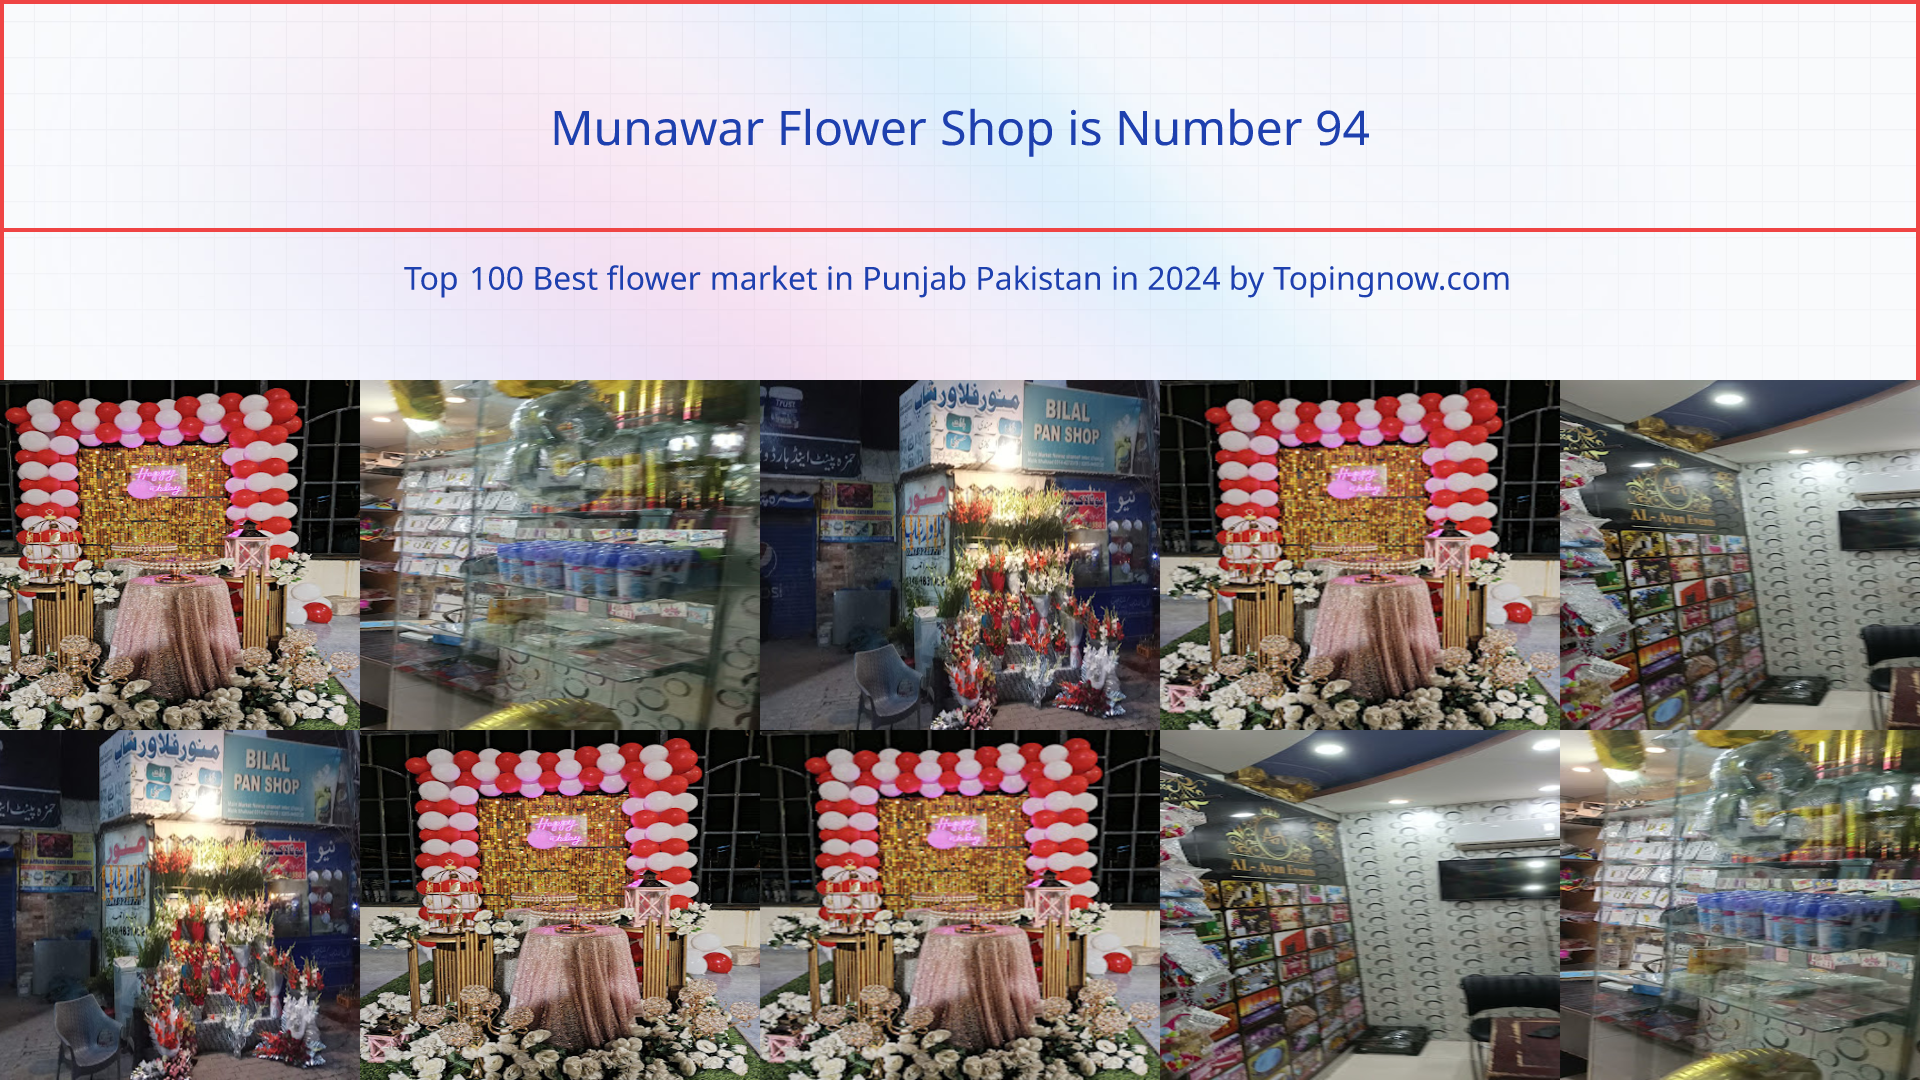 Munawar Flower Shop: Top 100 Best flower market in Punjab Pakistan in 2024